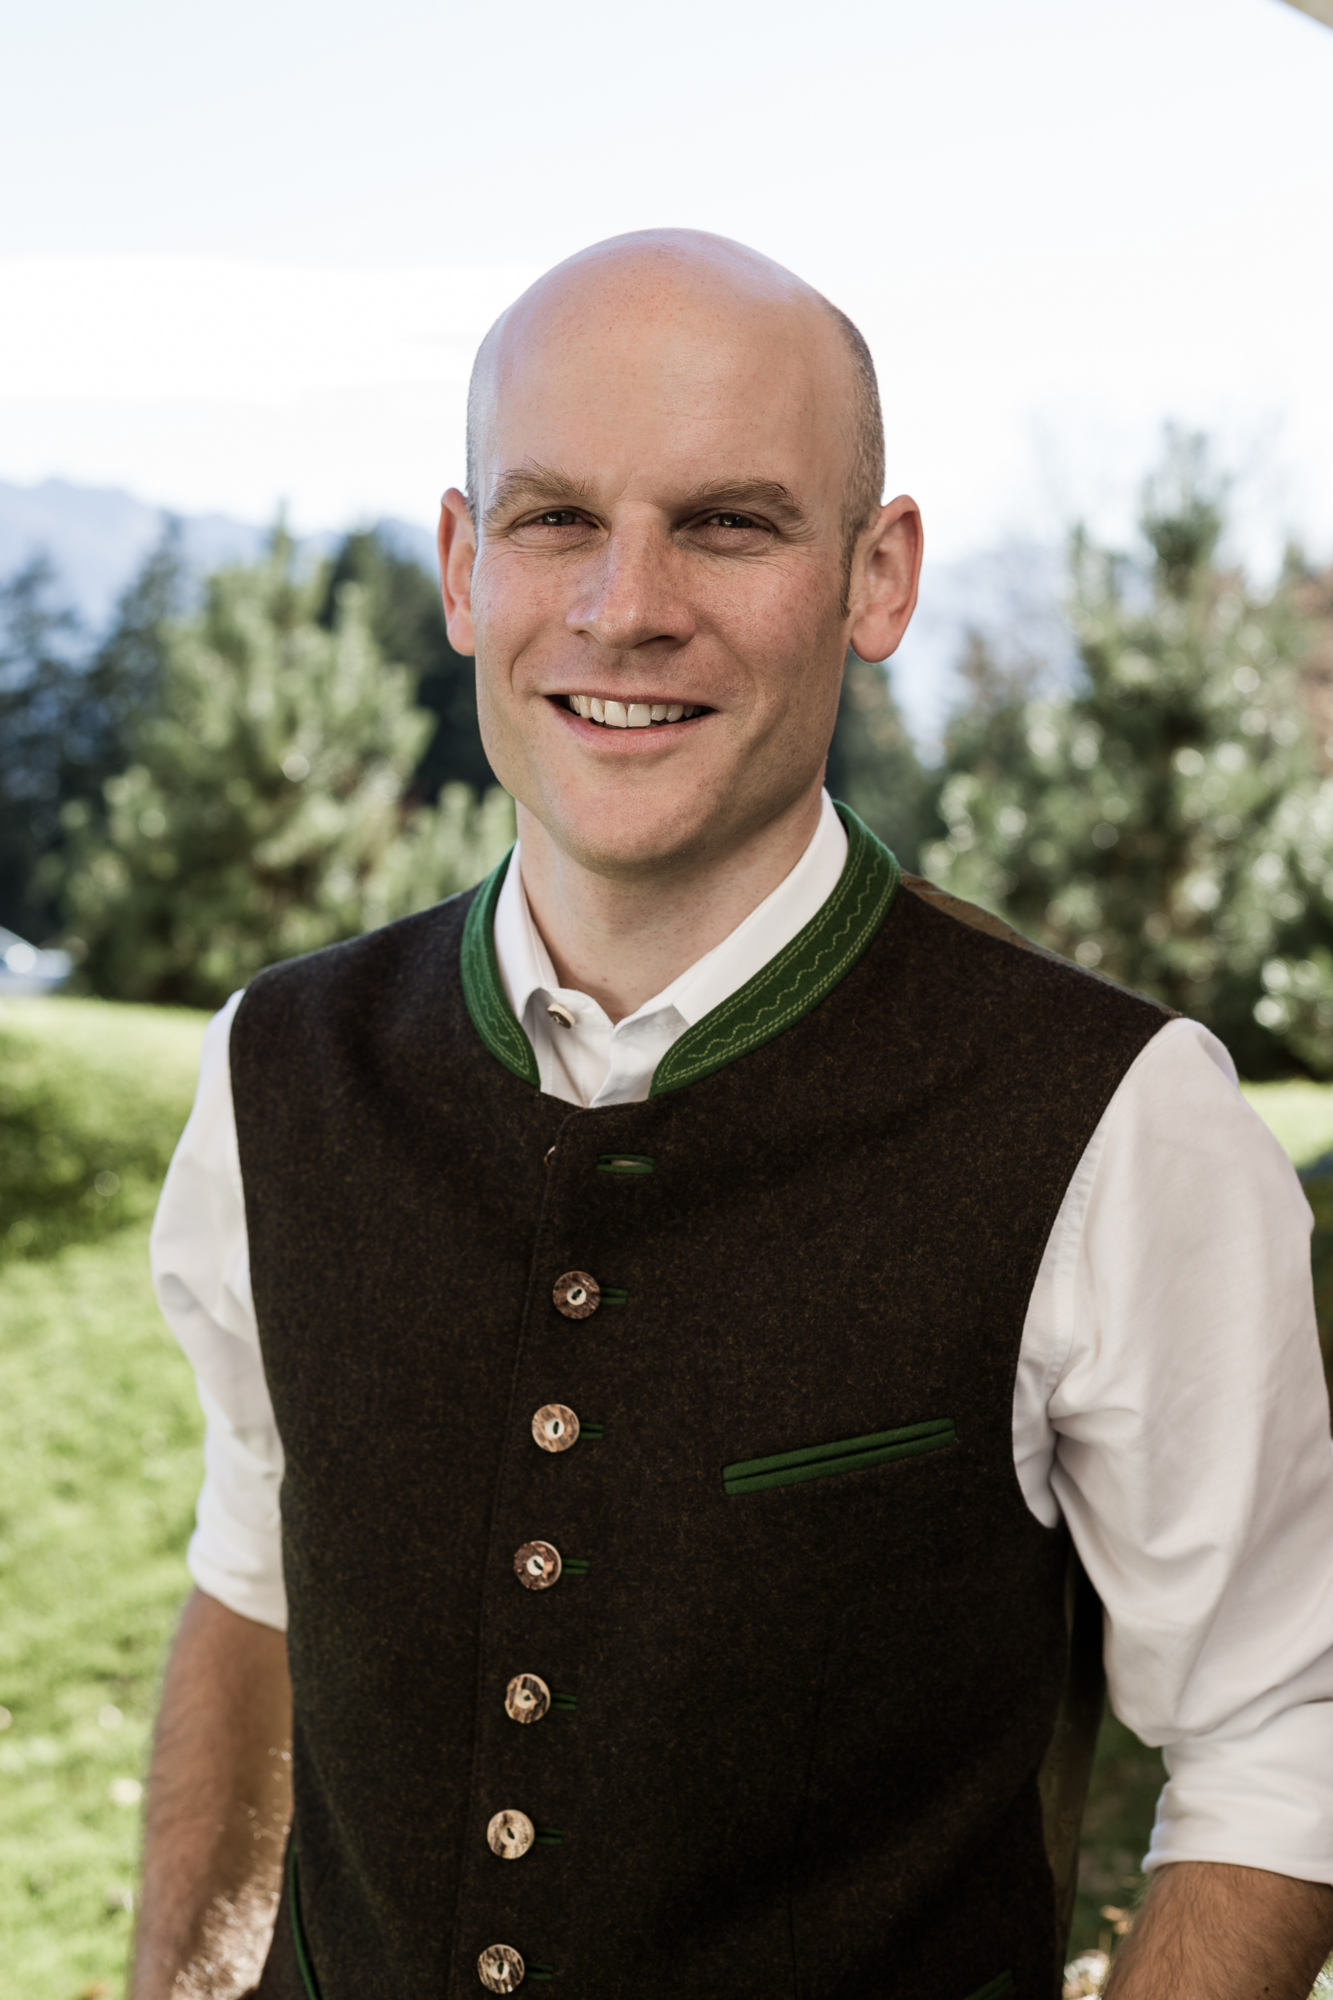 Christian Neusch ist der Geschäftsführer des Allgäuer Berghofs in Blaichach. Foto: Allgäuer Berghof